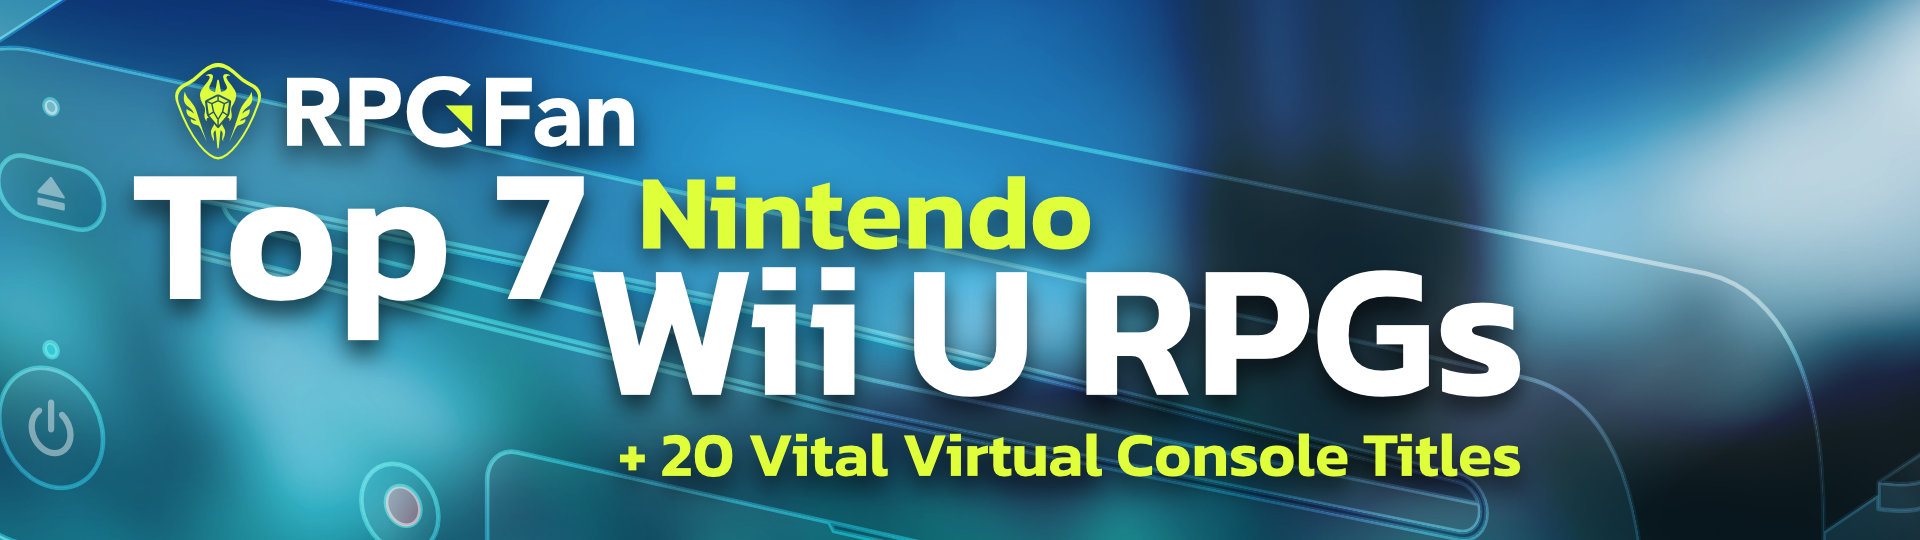 Top 7 Wii U RPGs + 20 Vital Virtual Console Titles